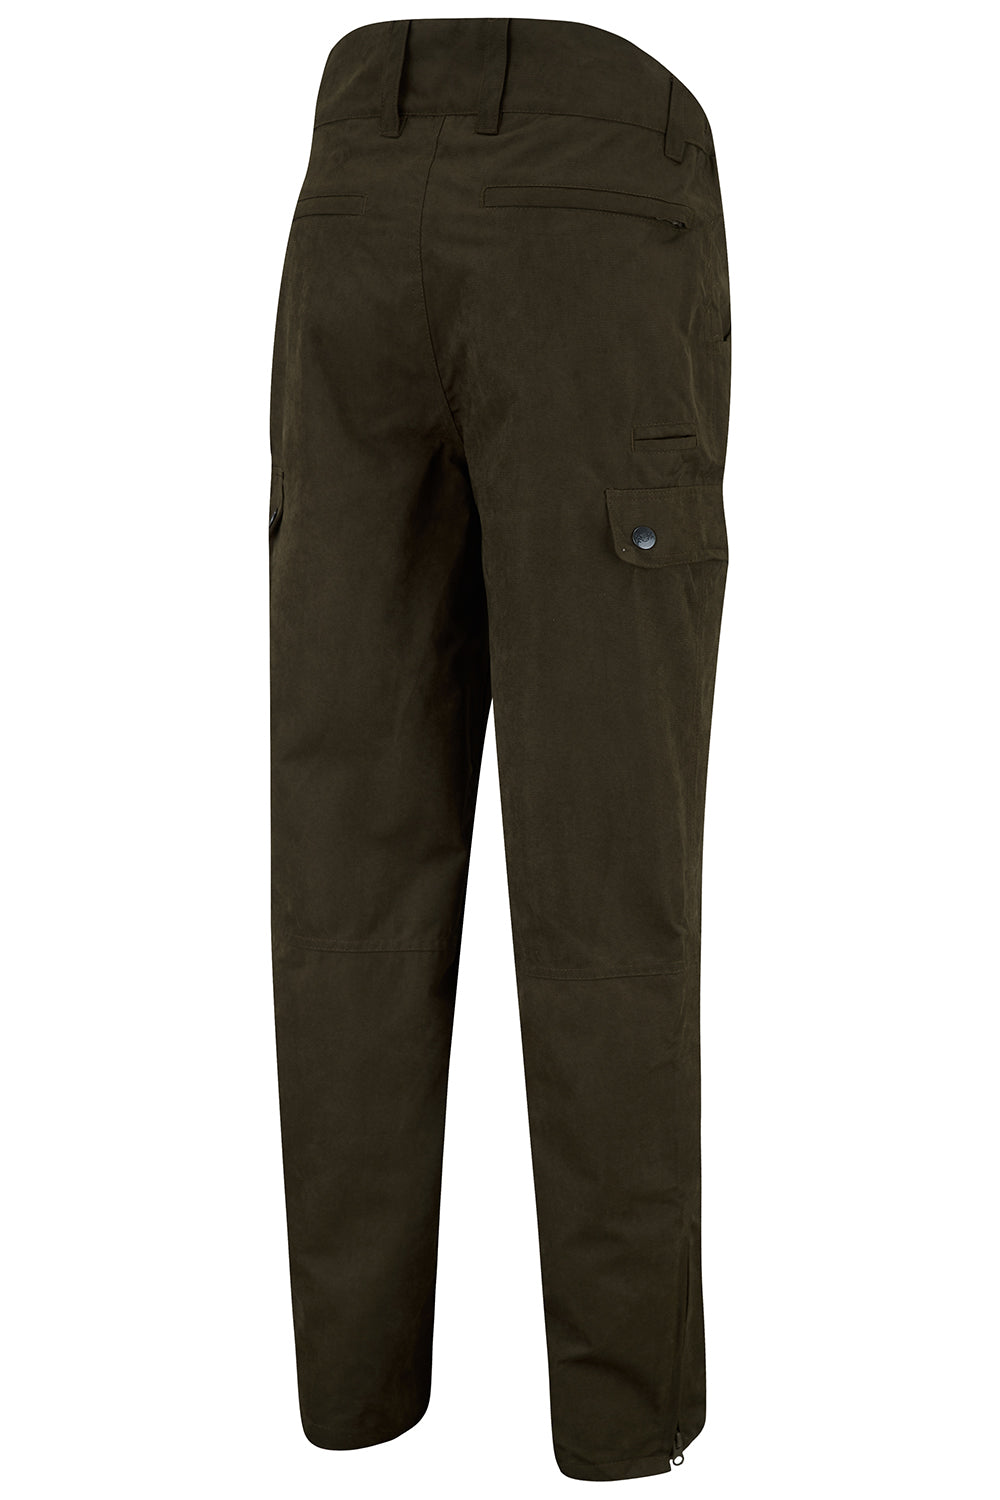 Bolderton Men's Outlands All-Climate Series Waterproof Shell Pants -  702717, Camo Pants at Sportsman's Guide